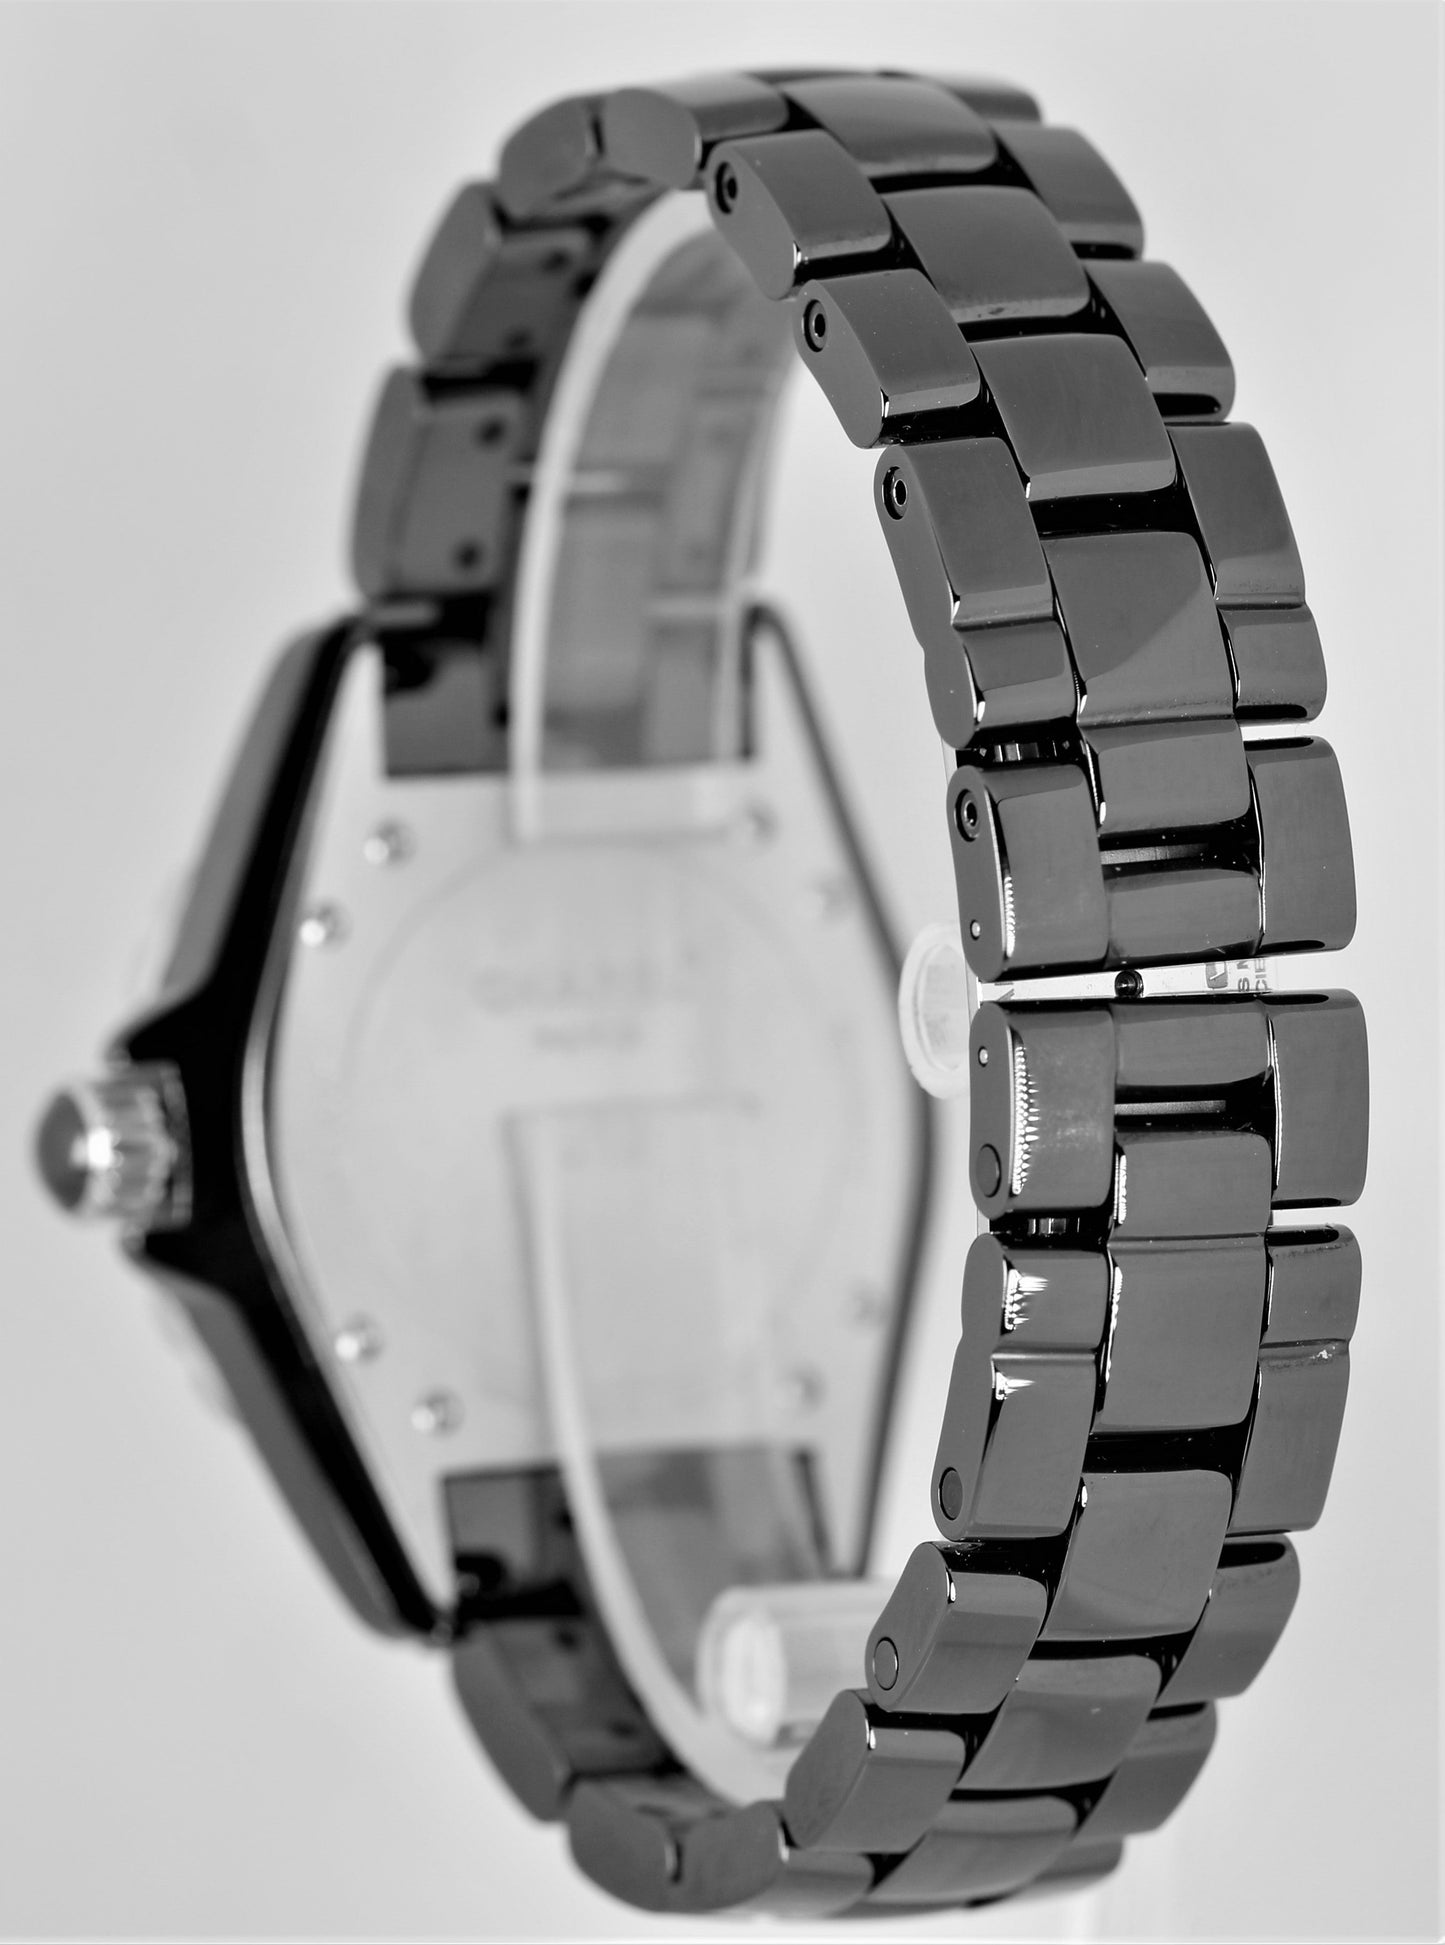 Chanel J12 Black Ceramic Automatic Black RUBY Dial 38mm H1635 Watch